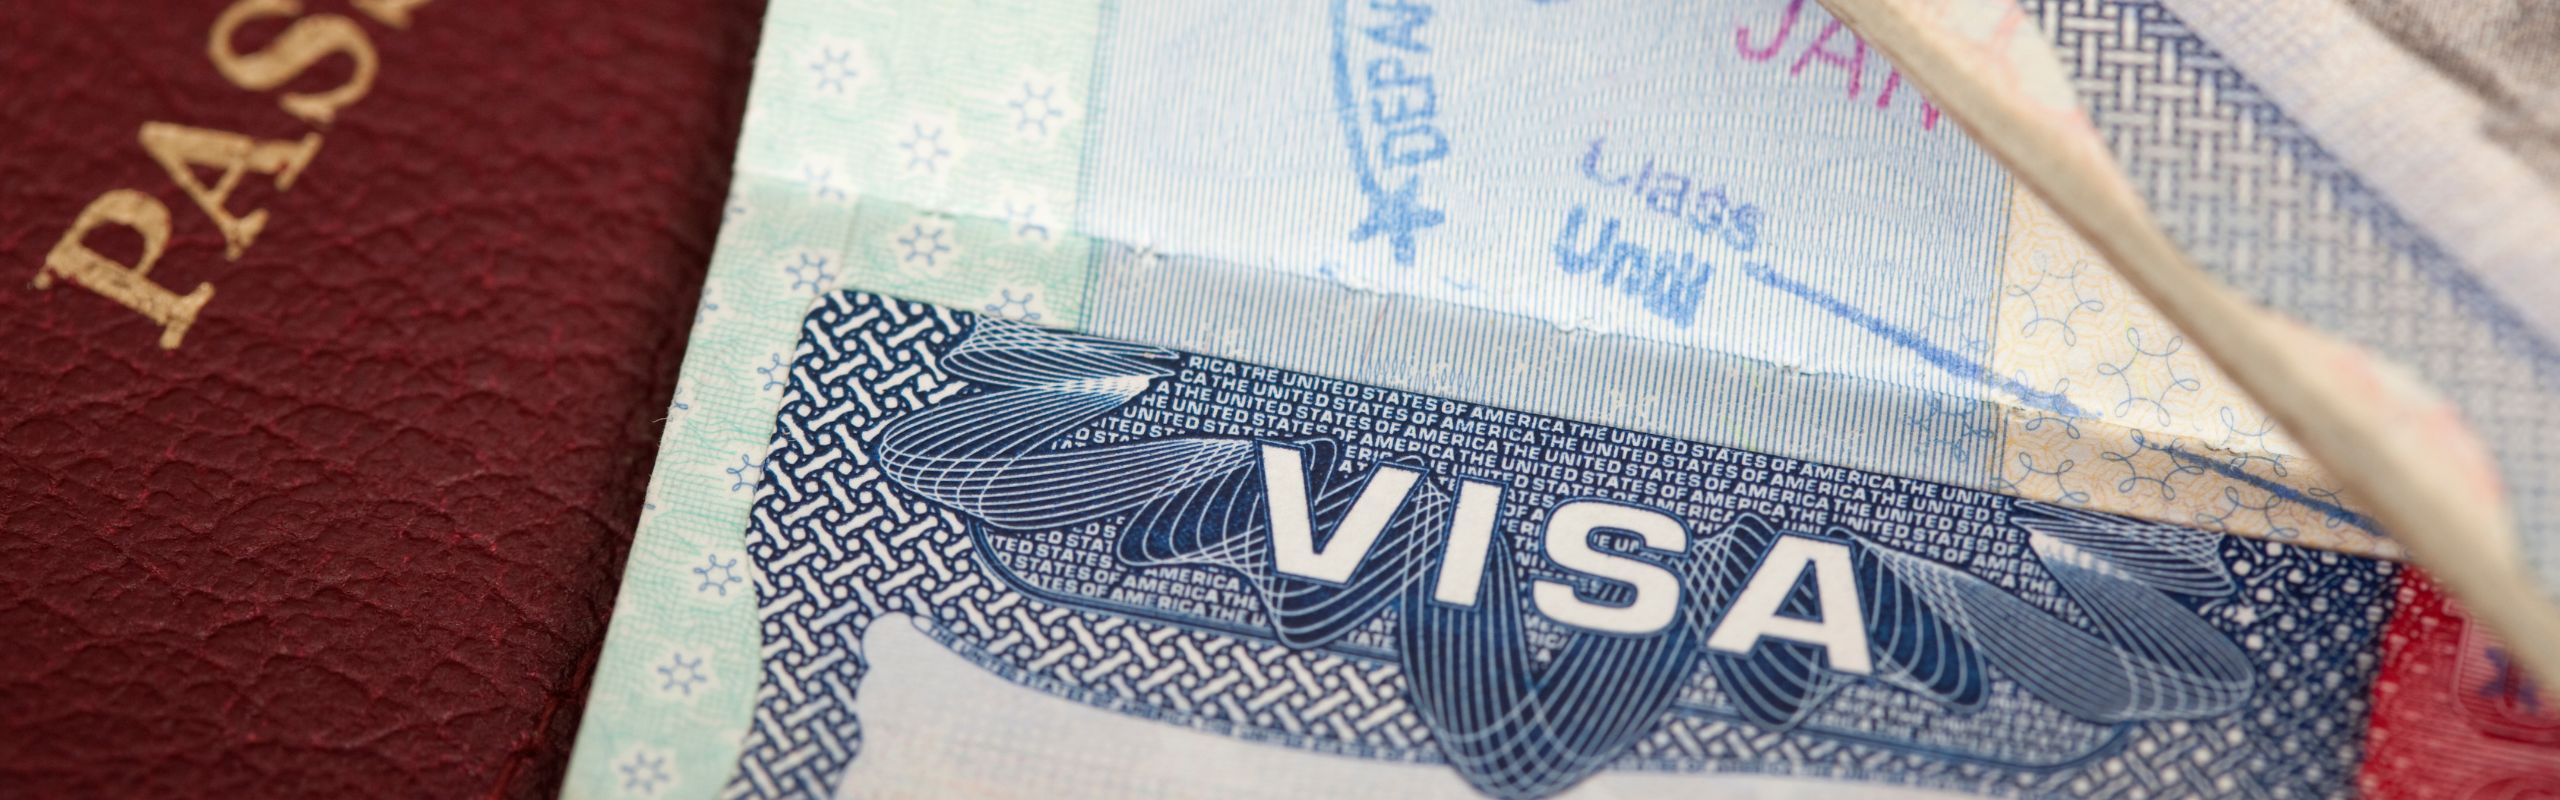 Image of a visa next to a passport